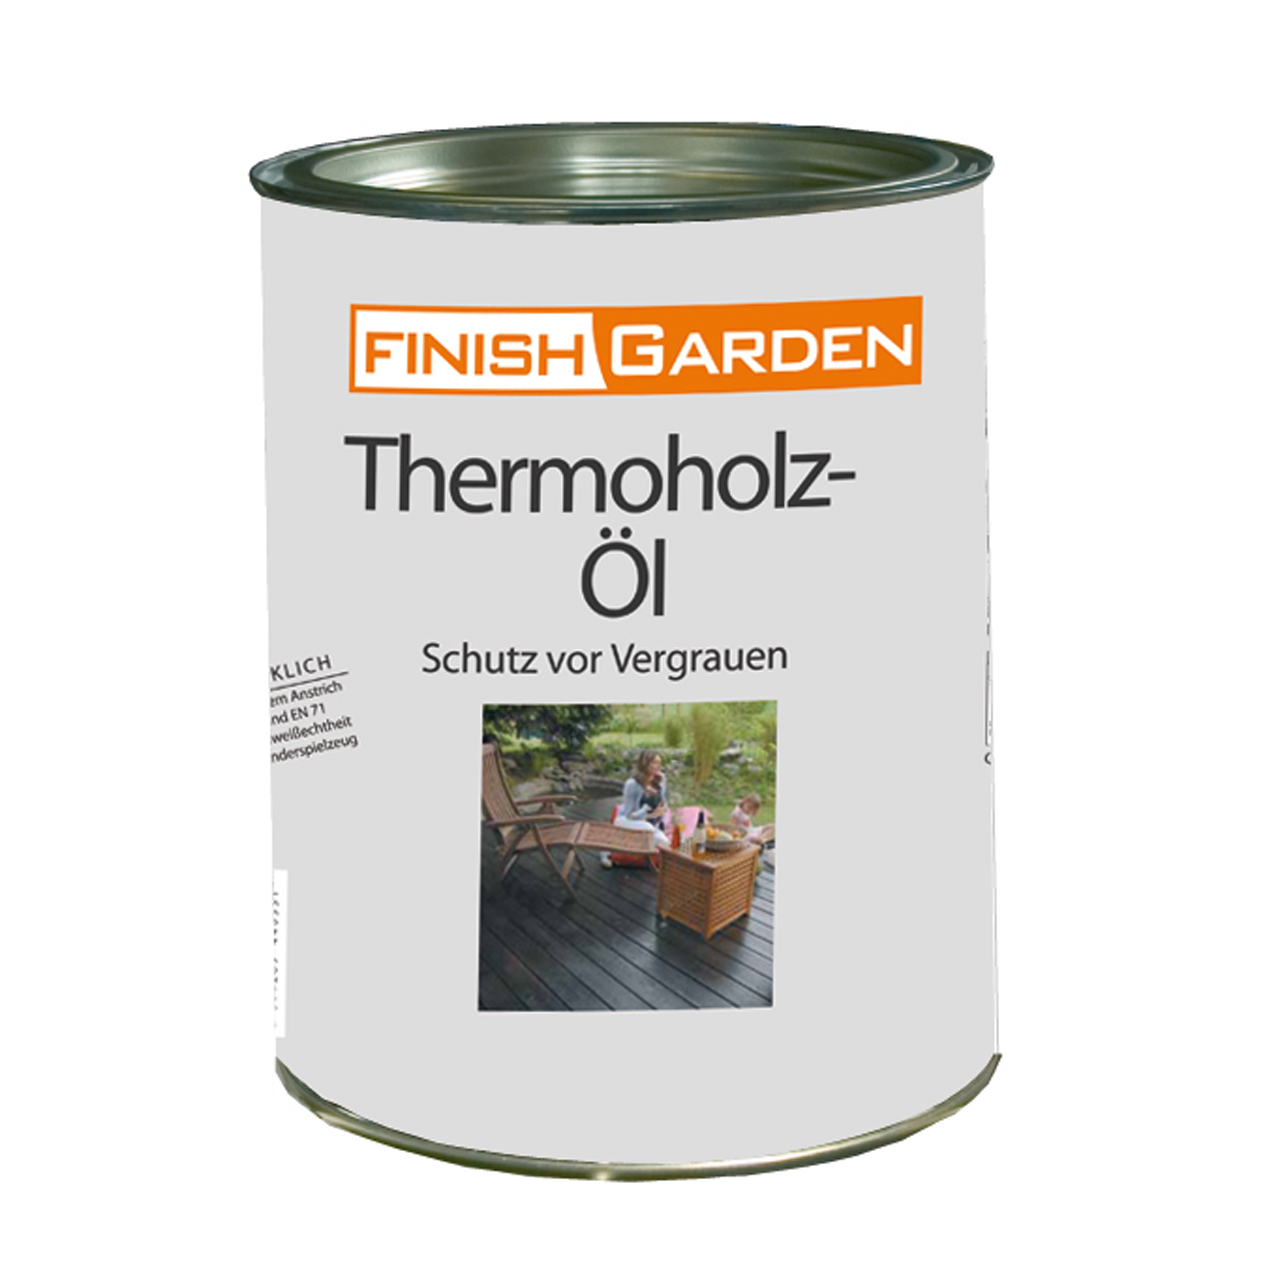 Finish Garden Thermoholz-Öl, 0,75 l